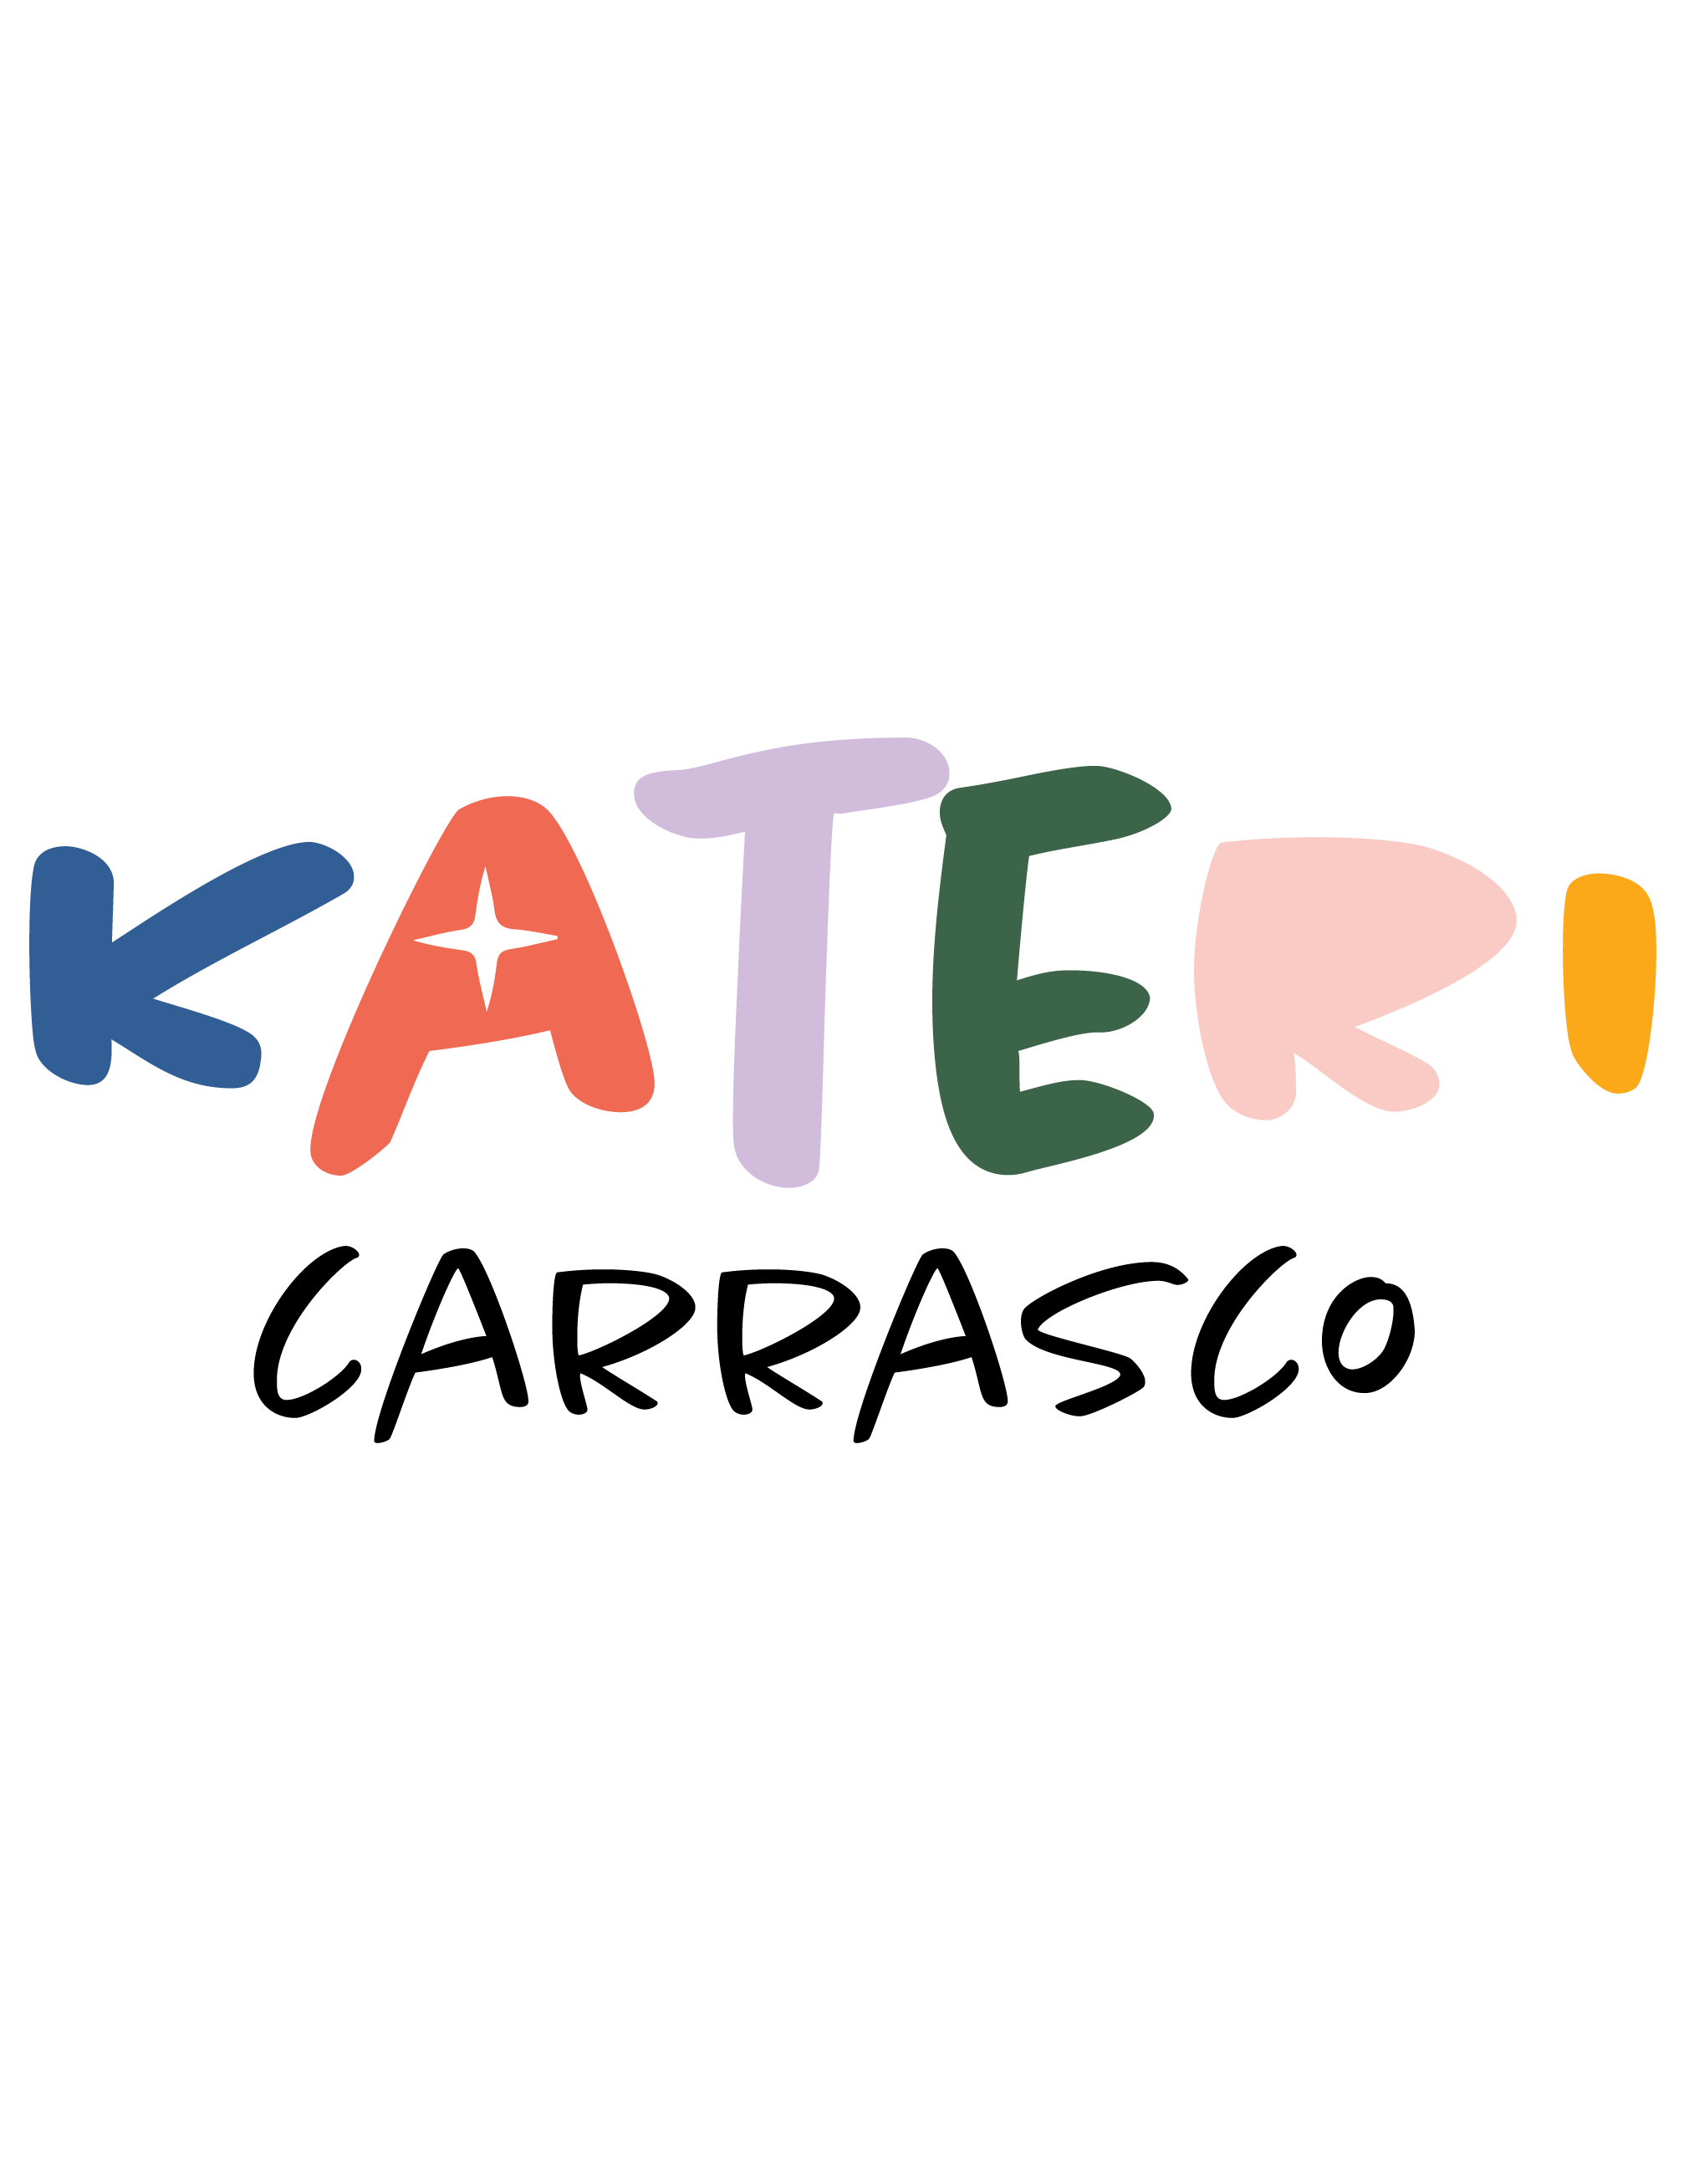 Kateri Carrasco